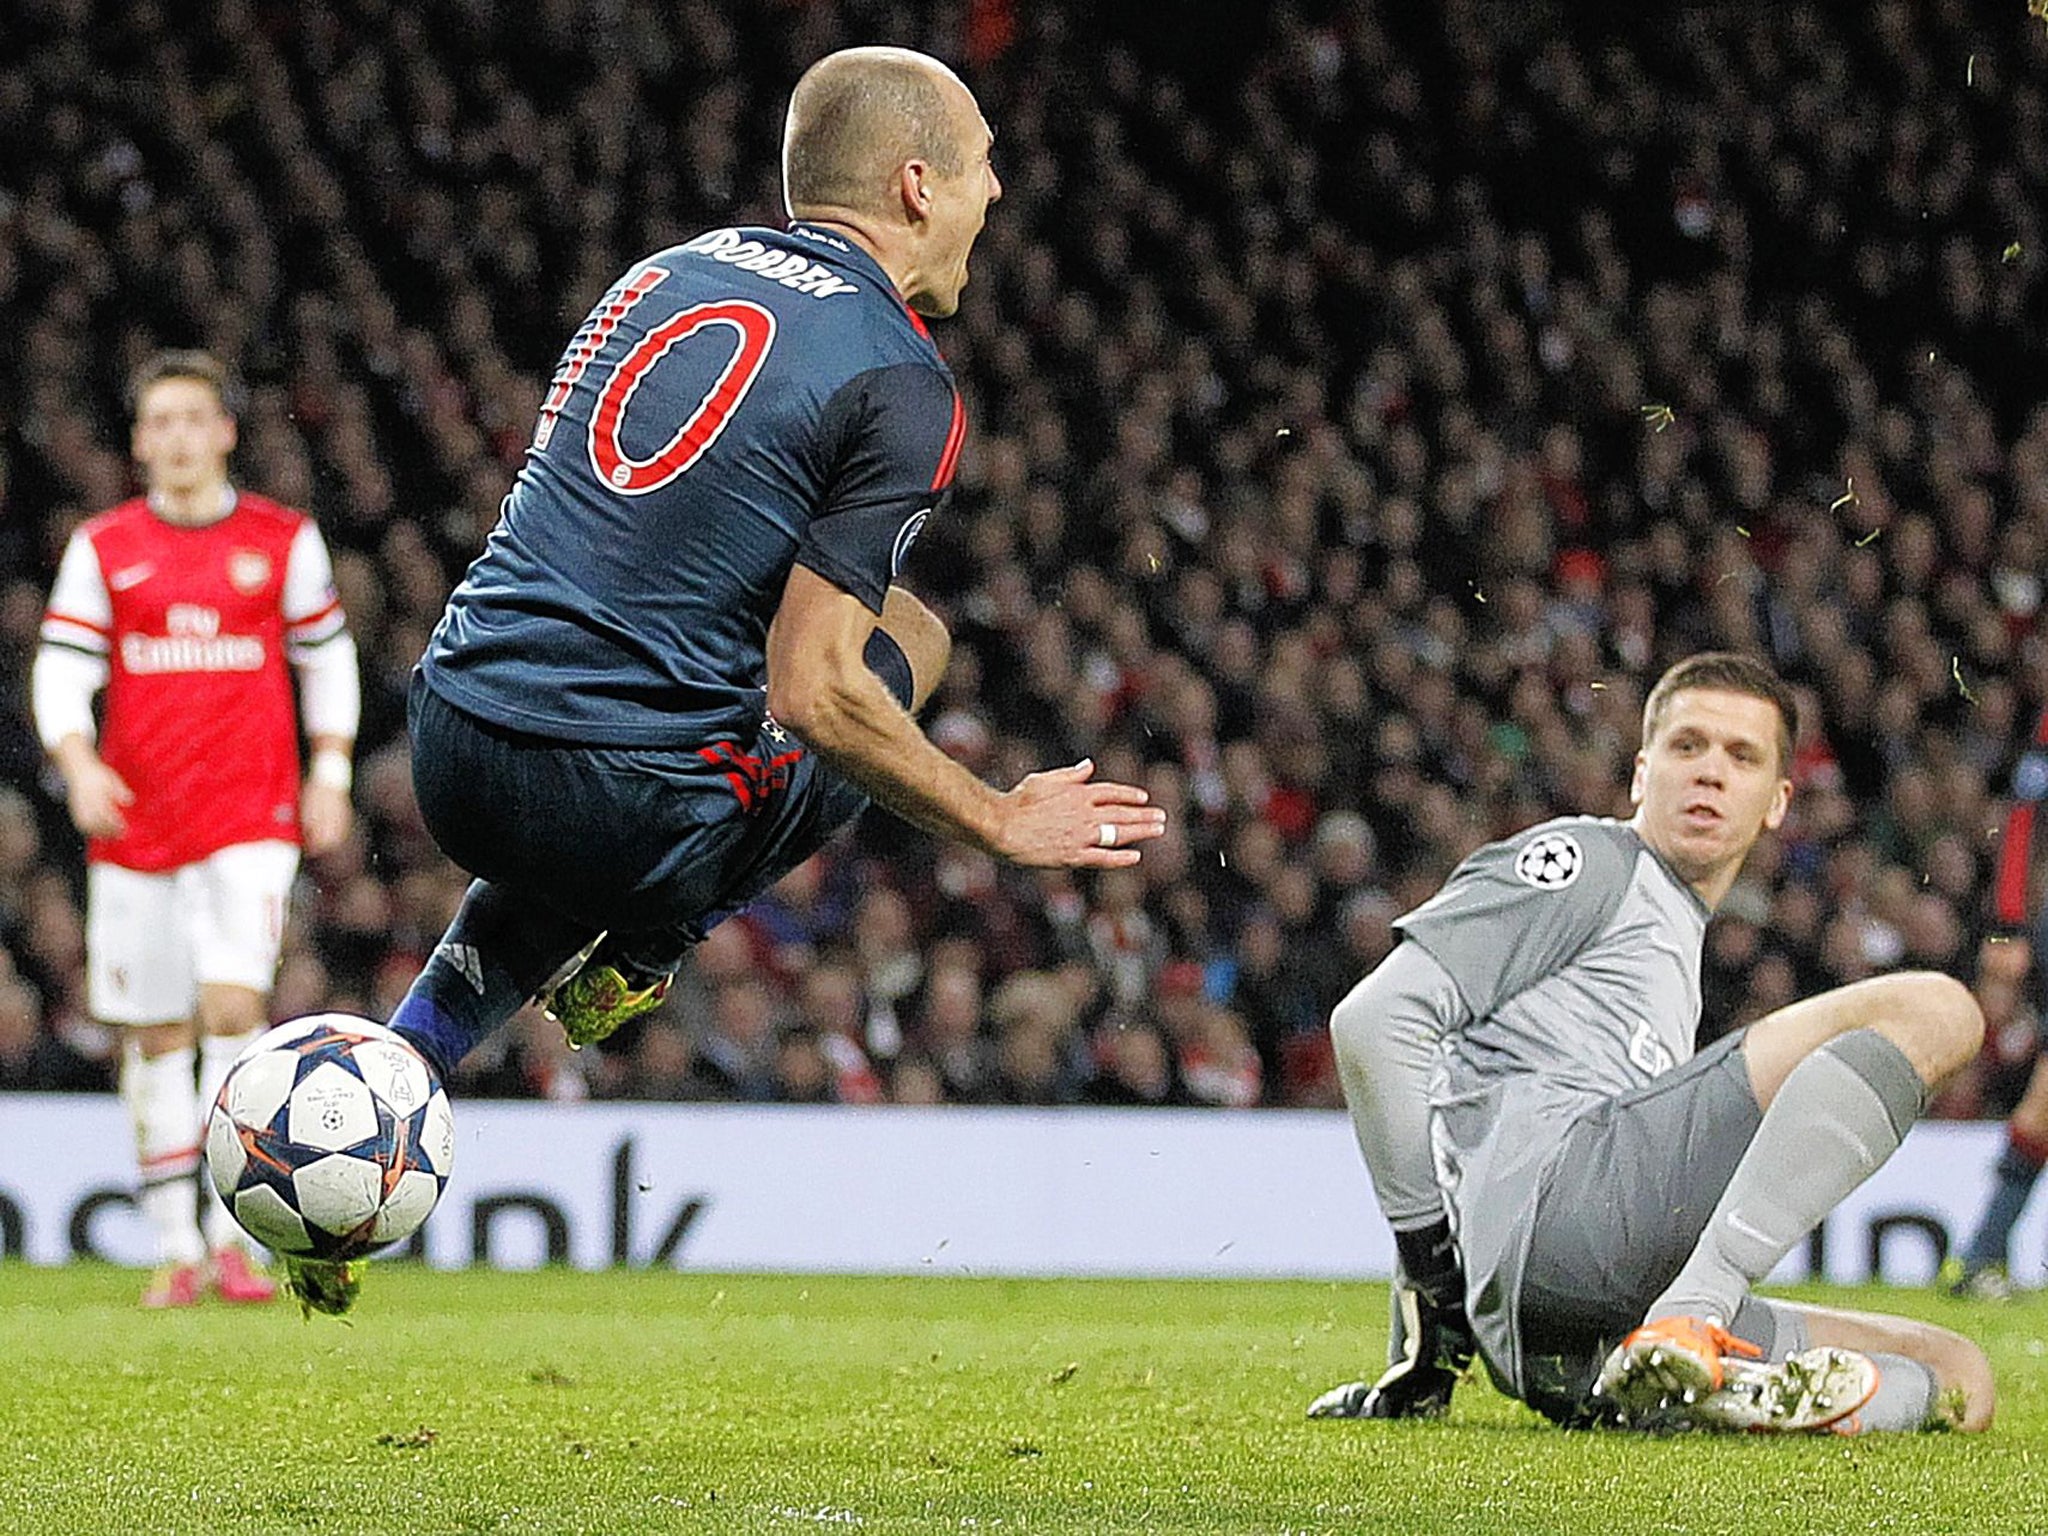 The game turned in the first leg when Arjen Robben was brought down by Wojciech Szczesny